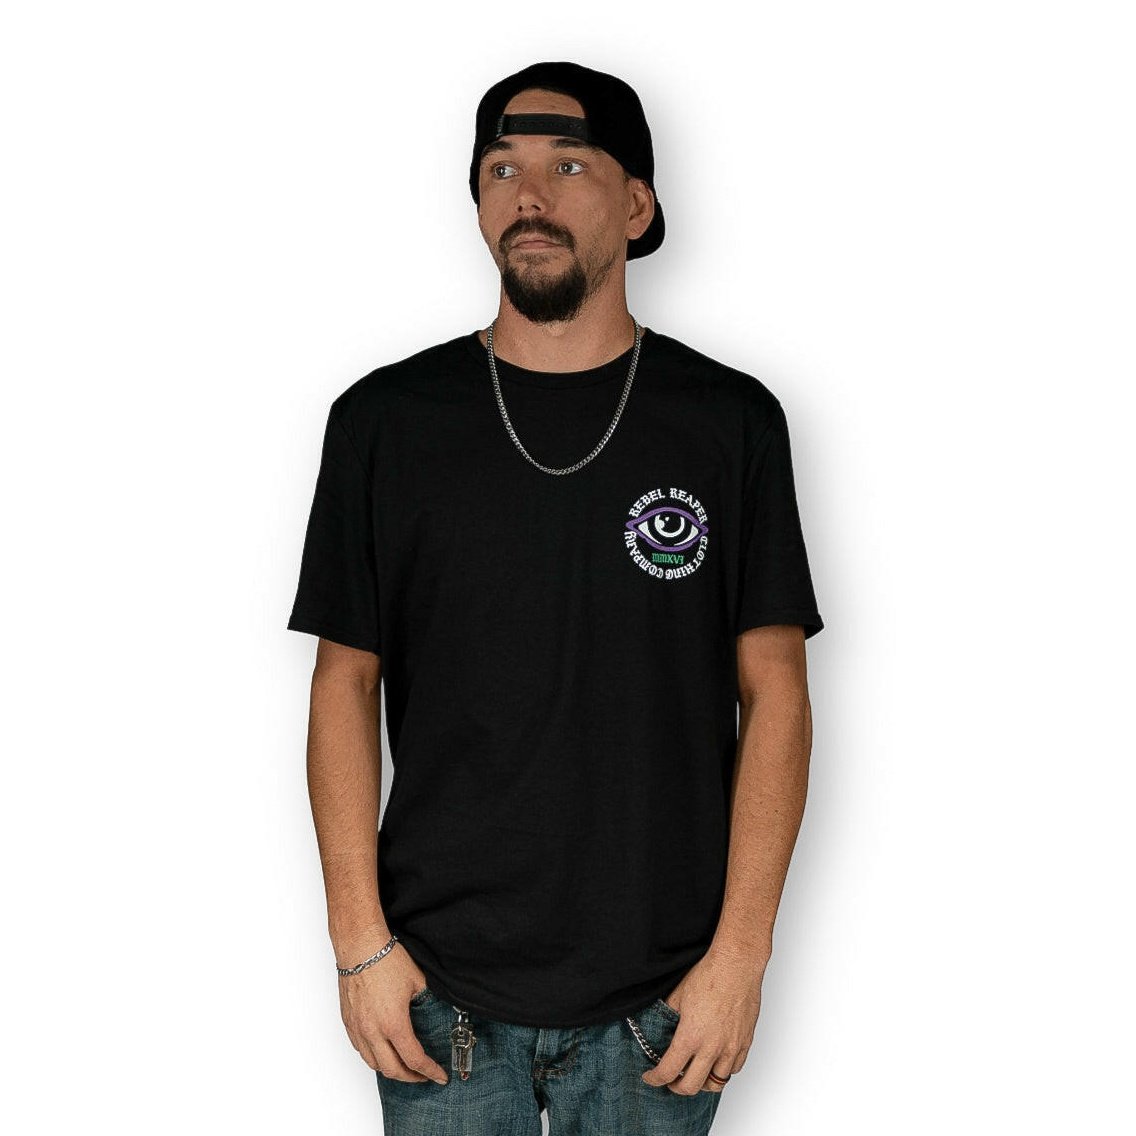 Dues Paid Black T-Shirt - Rebel Reaper Clothing Company T-Shirt